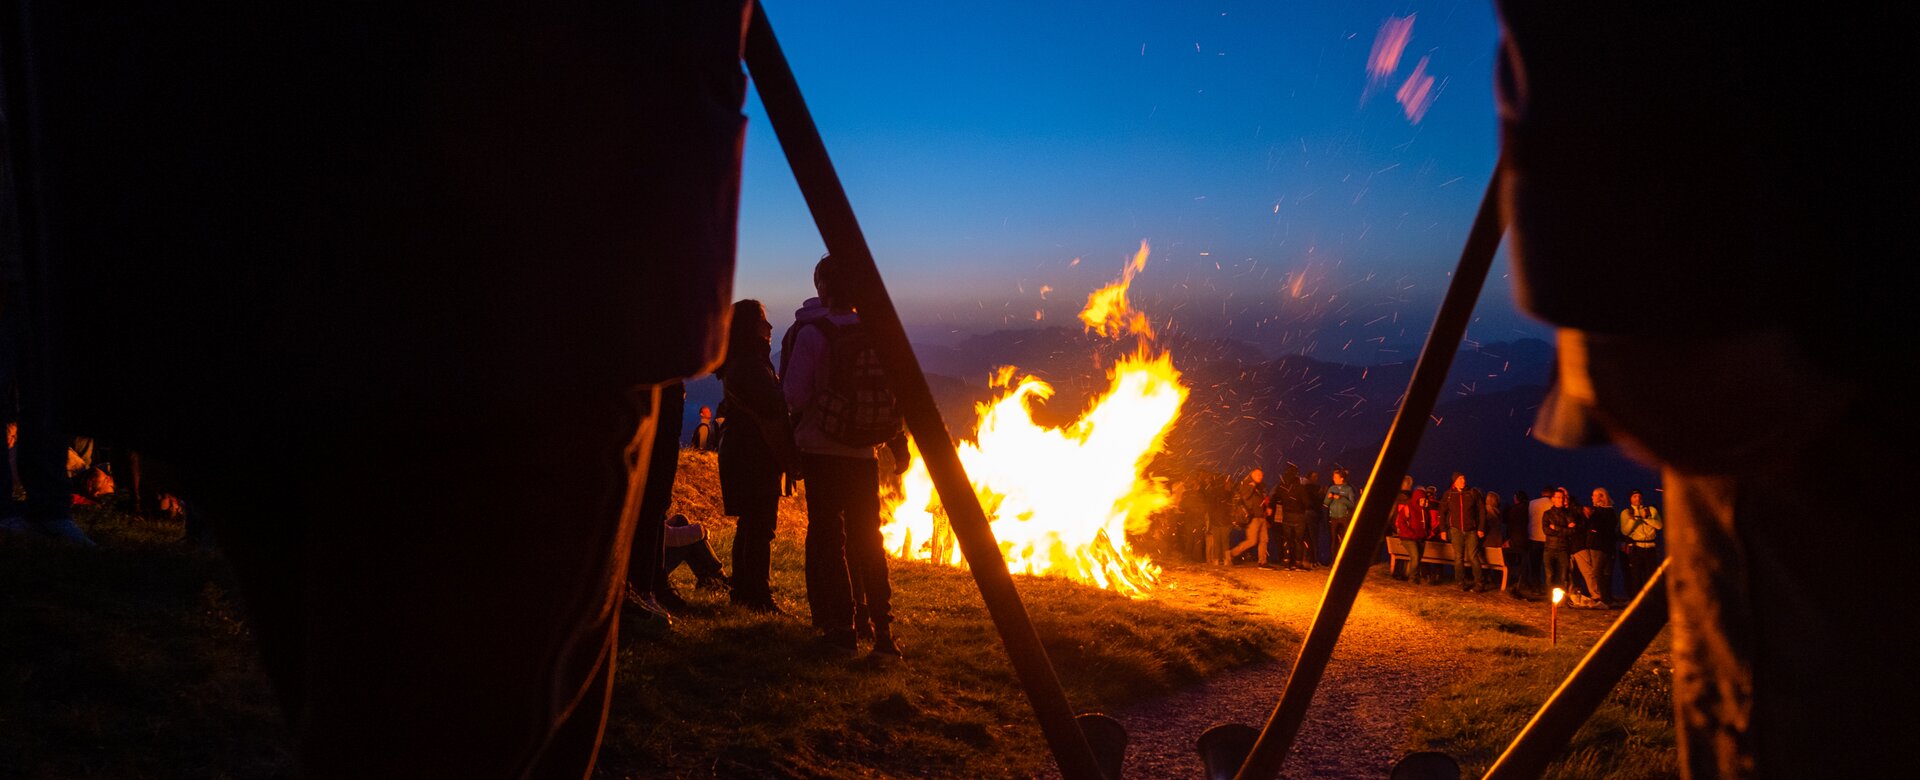 Solstice bonfire | © Gasteiner Bergbahnen AG